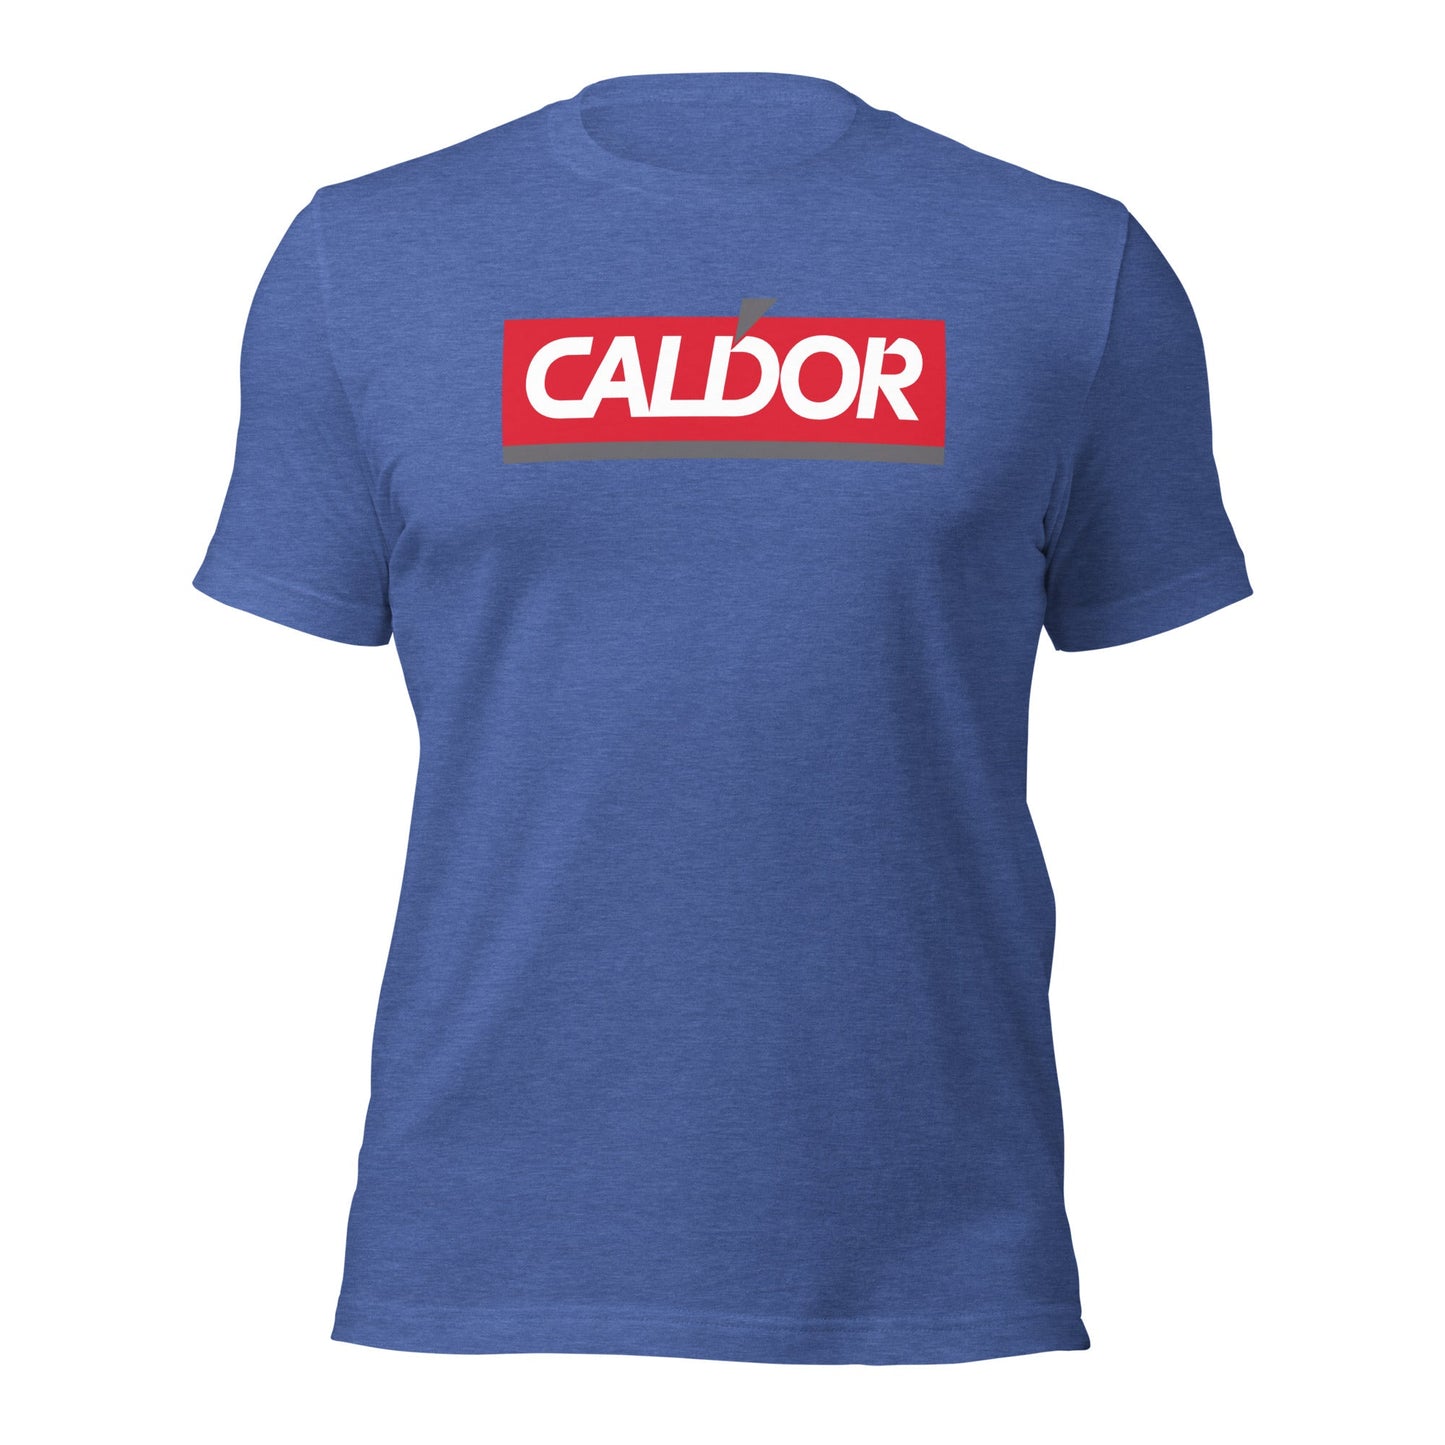 Caldor Retro T Shirt 1990s | Mens & Women's Graphic Tee